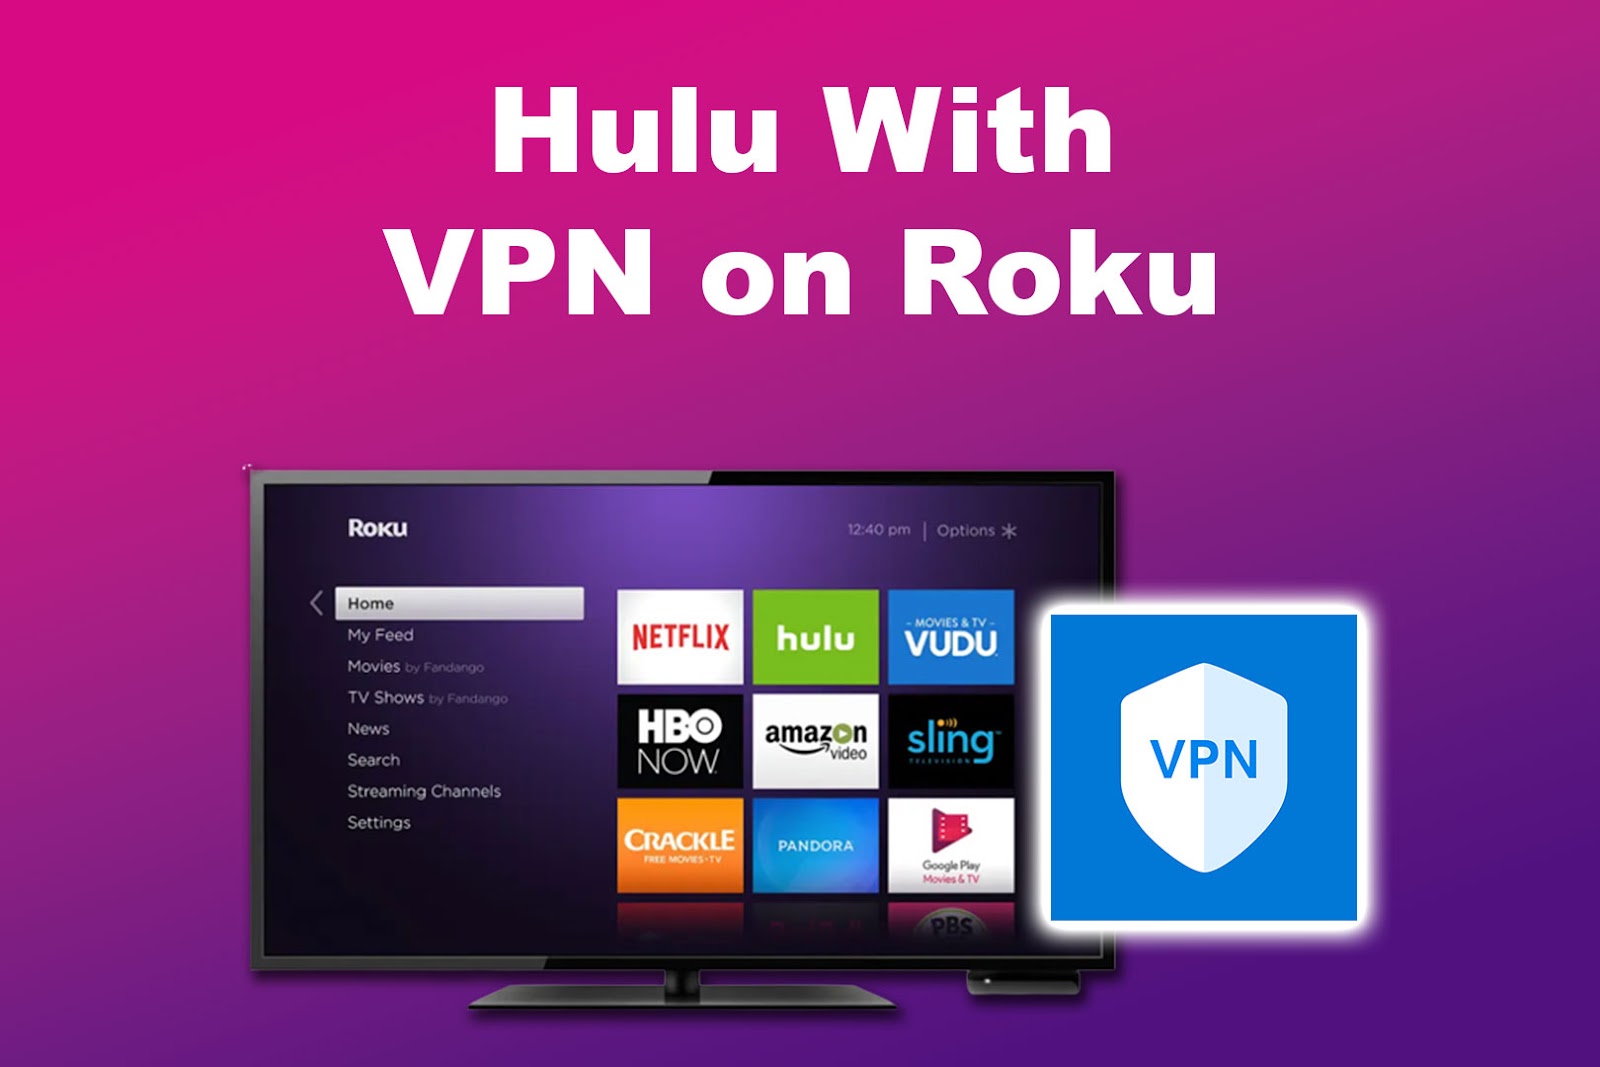 Hulu With VPN on Roku